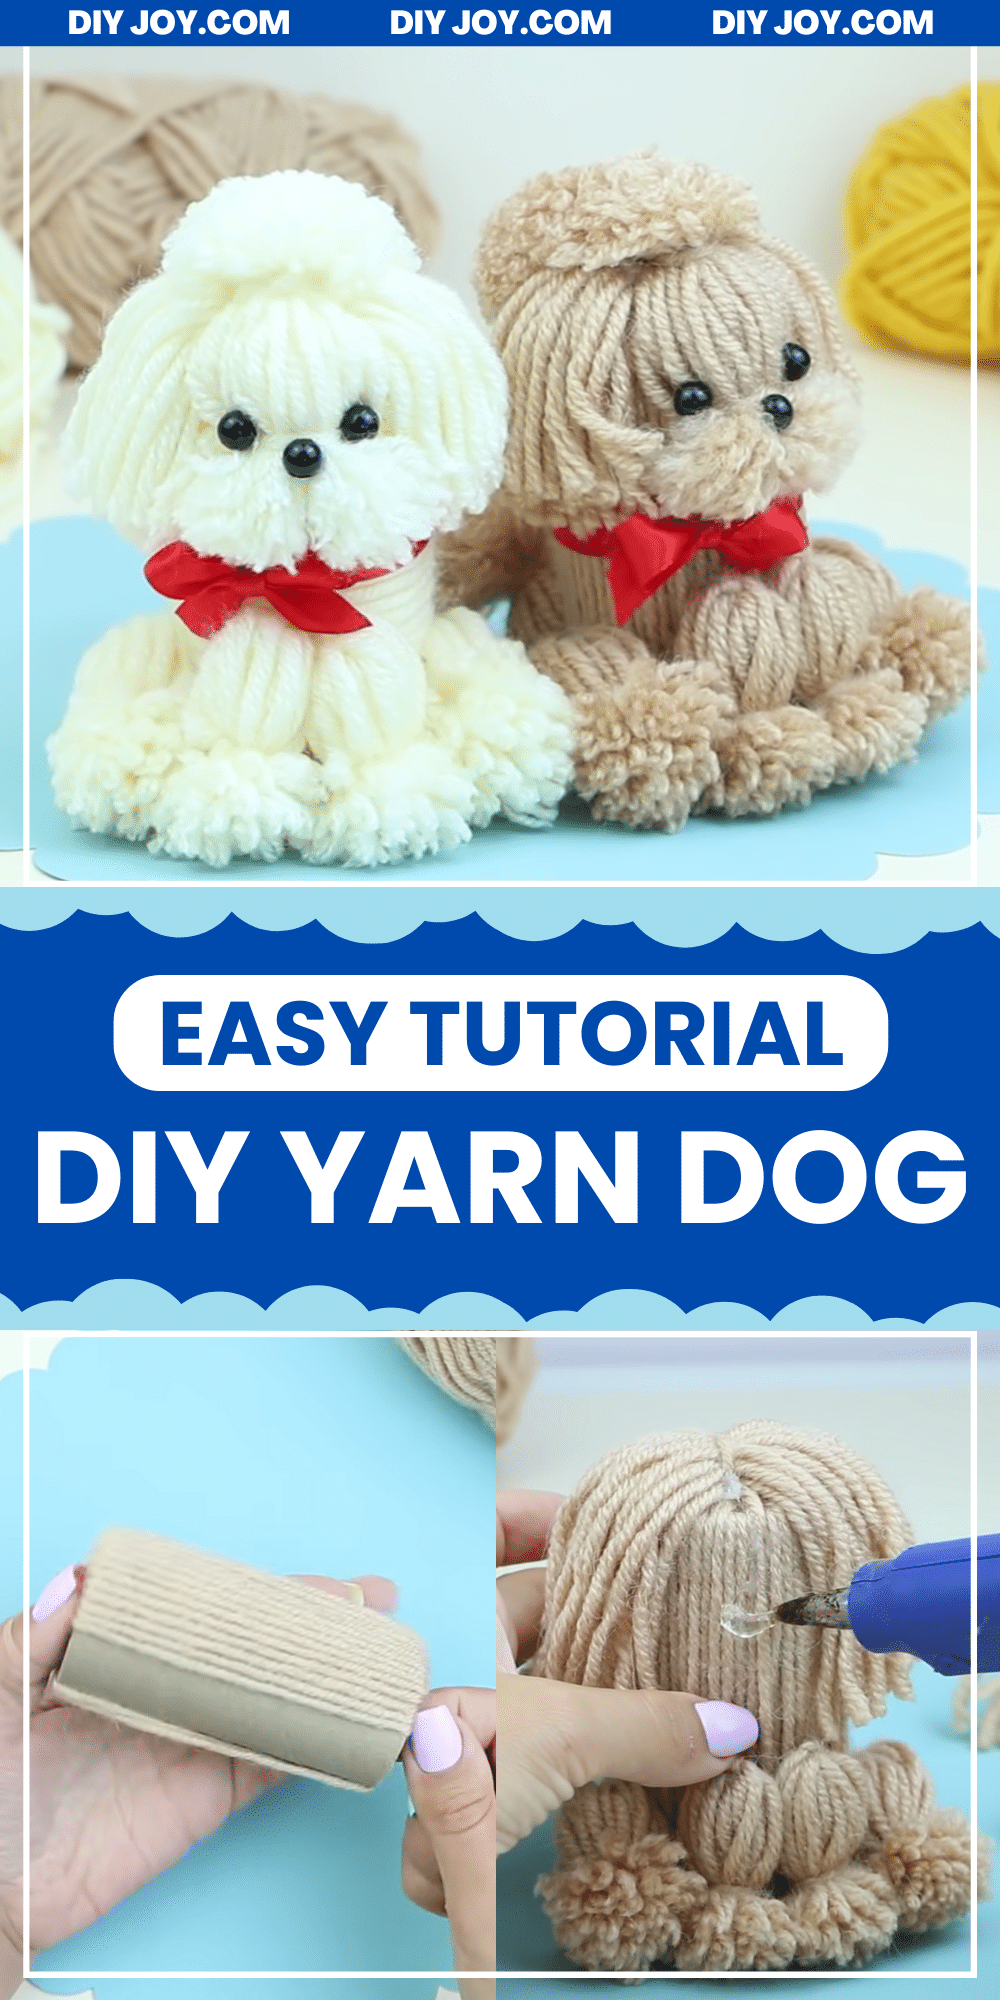 How To Make A DIY Yarn Dog